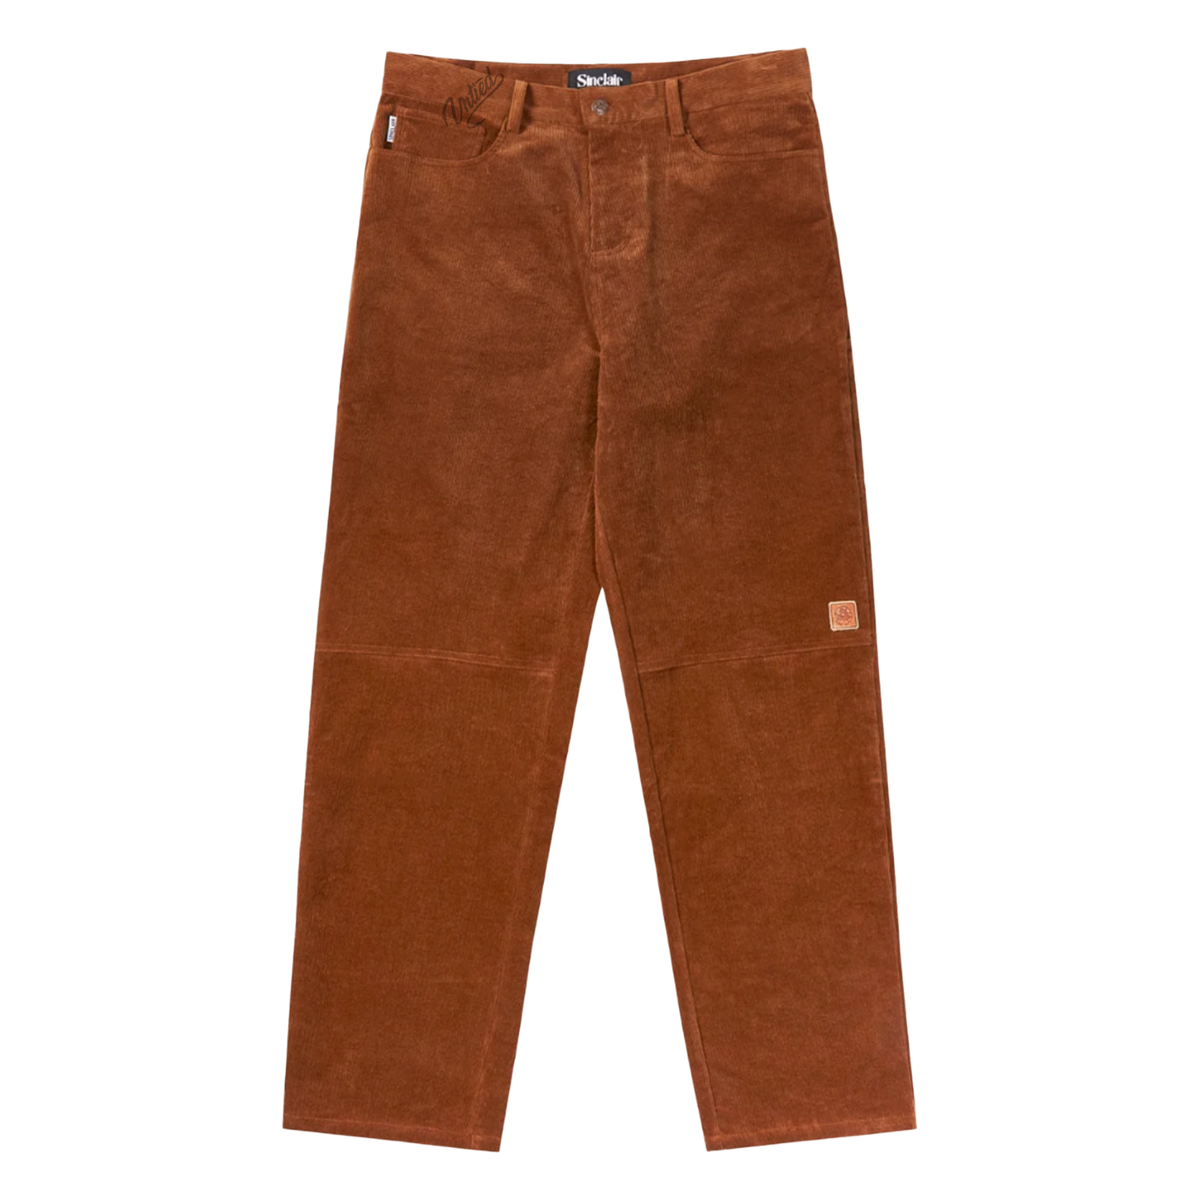 Sinclair Corduroy Pants "Brown"